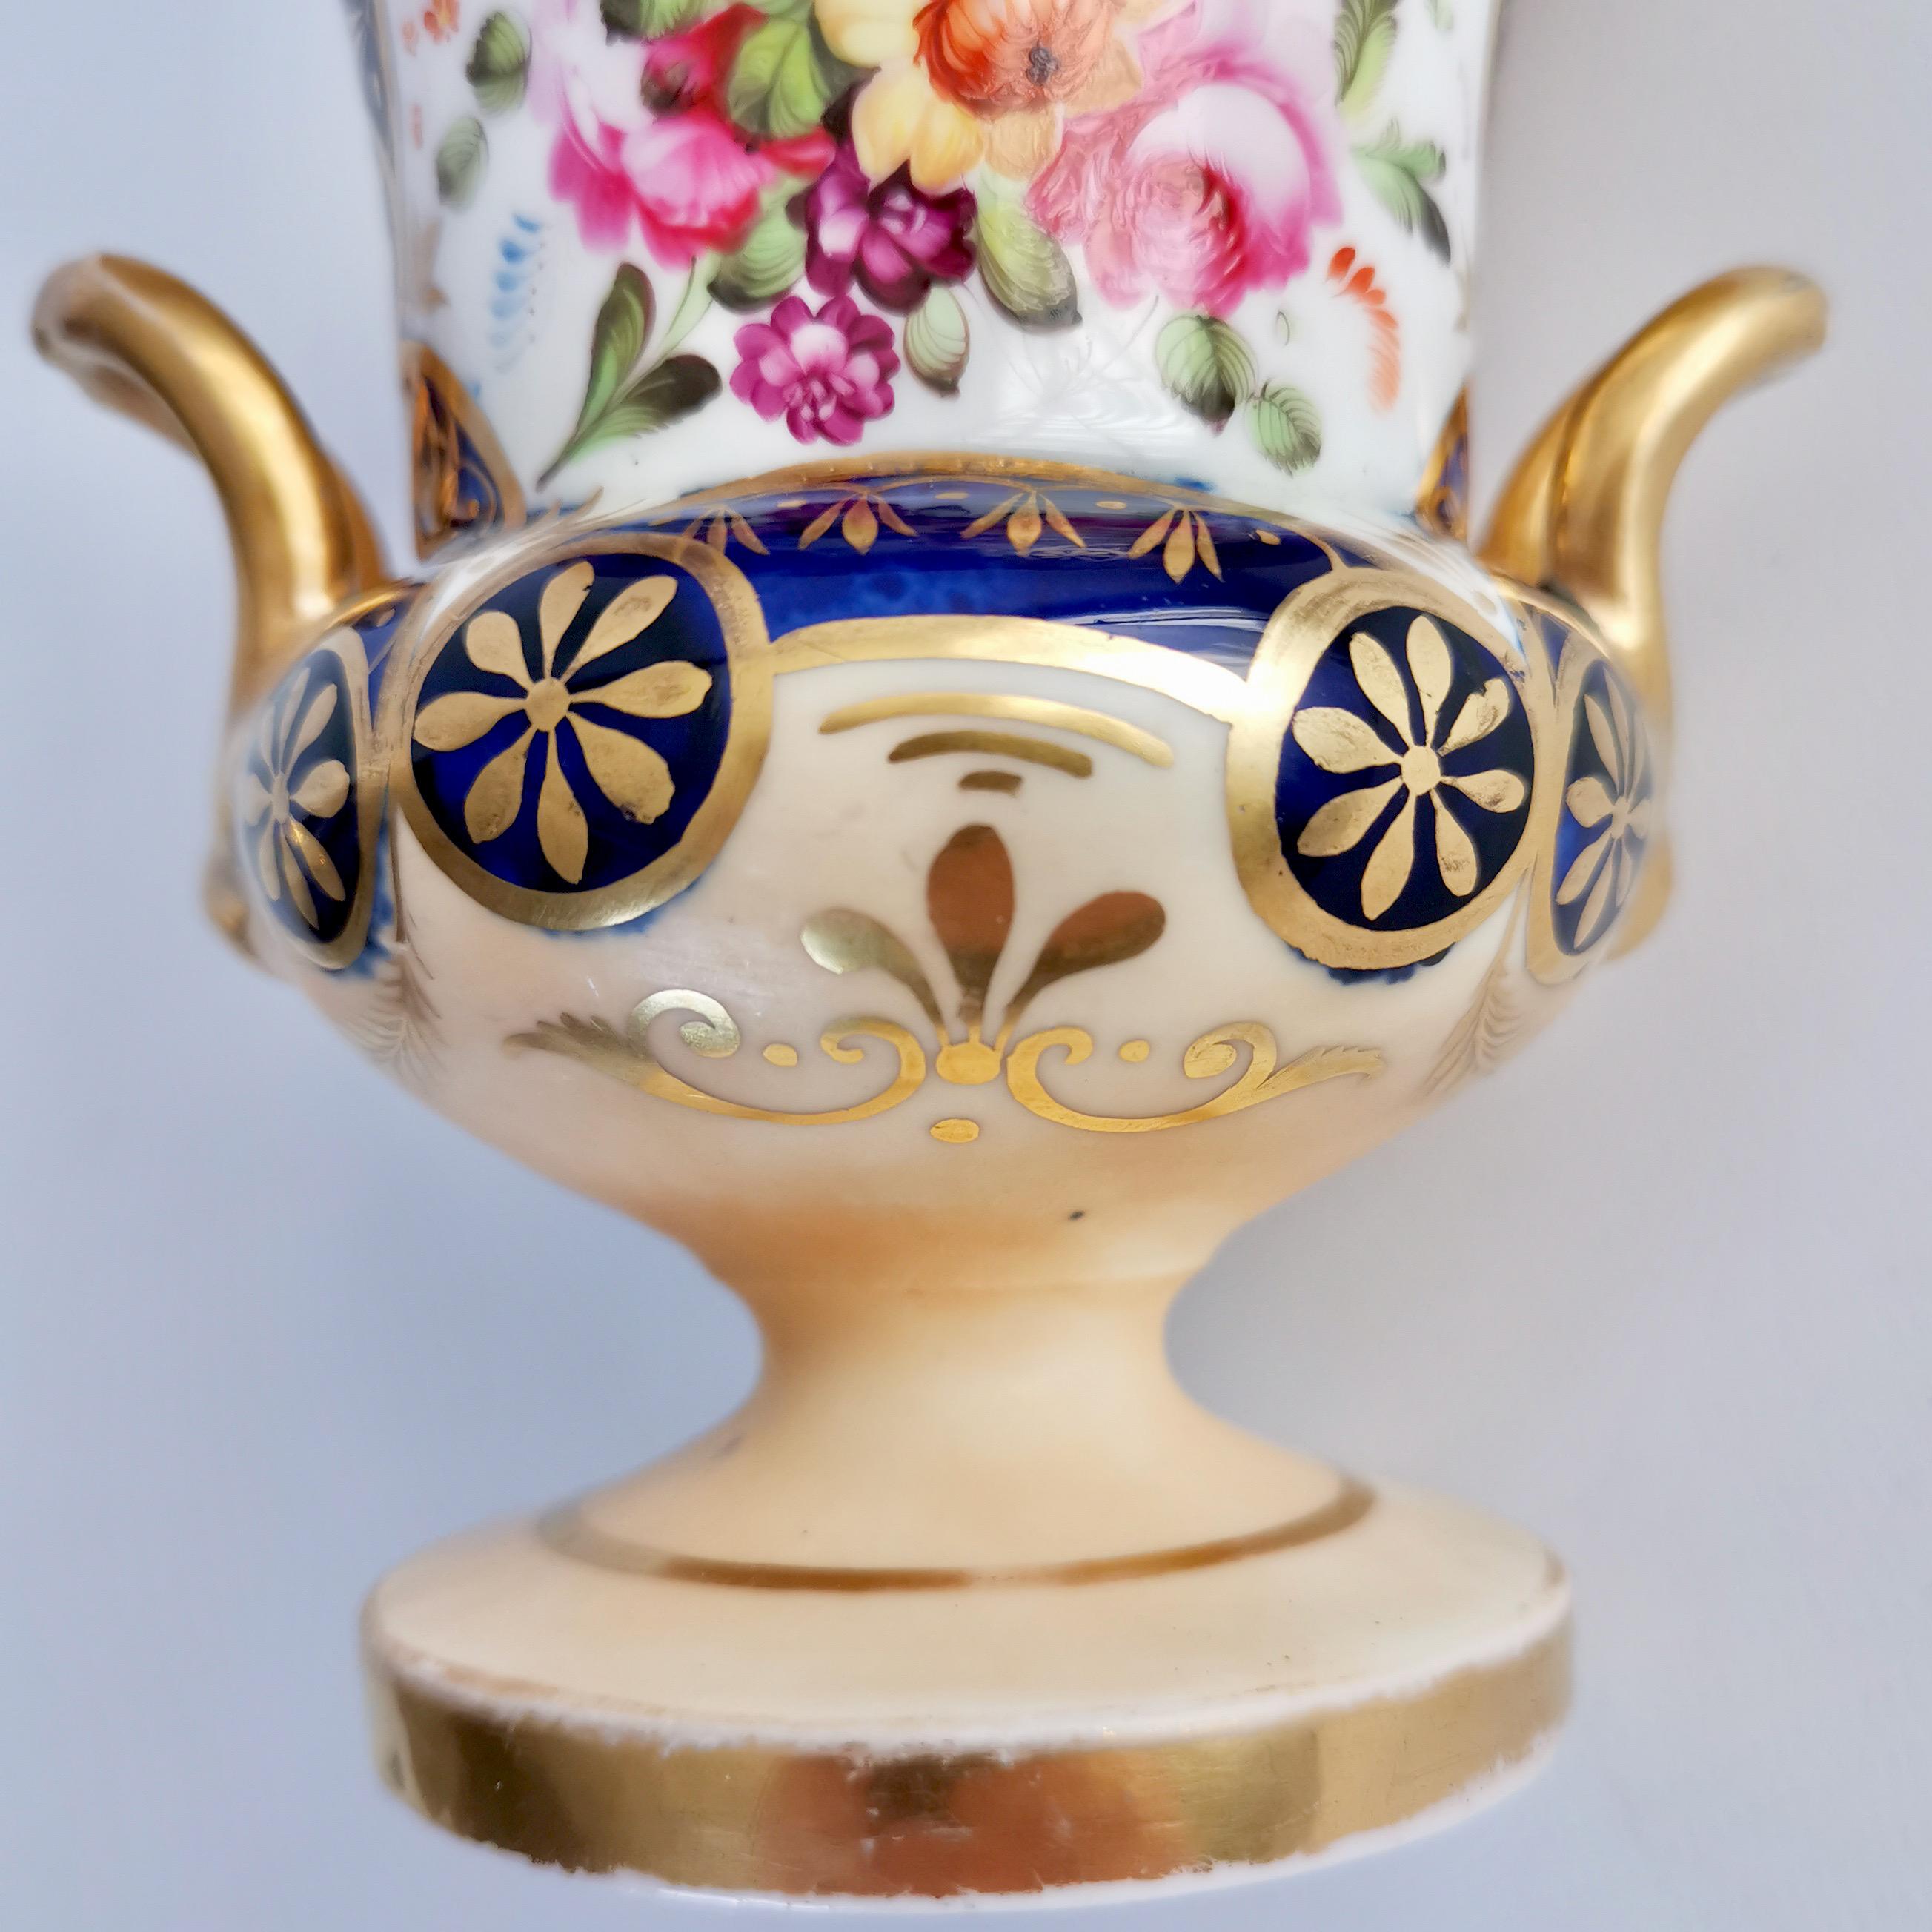 Staffordshire Porcelain Campana Vase, Salmon, Gilt and Flowers, circa 1820 For Sale 1